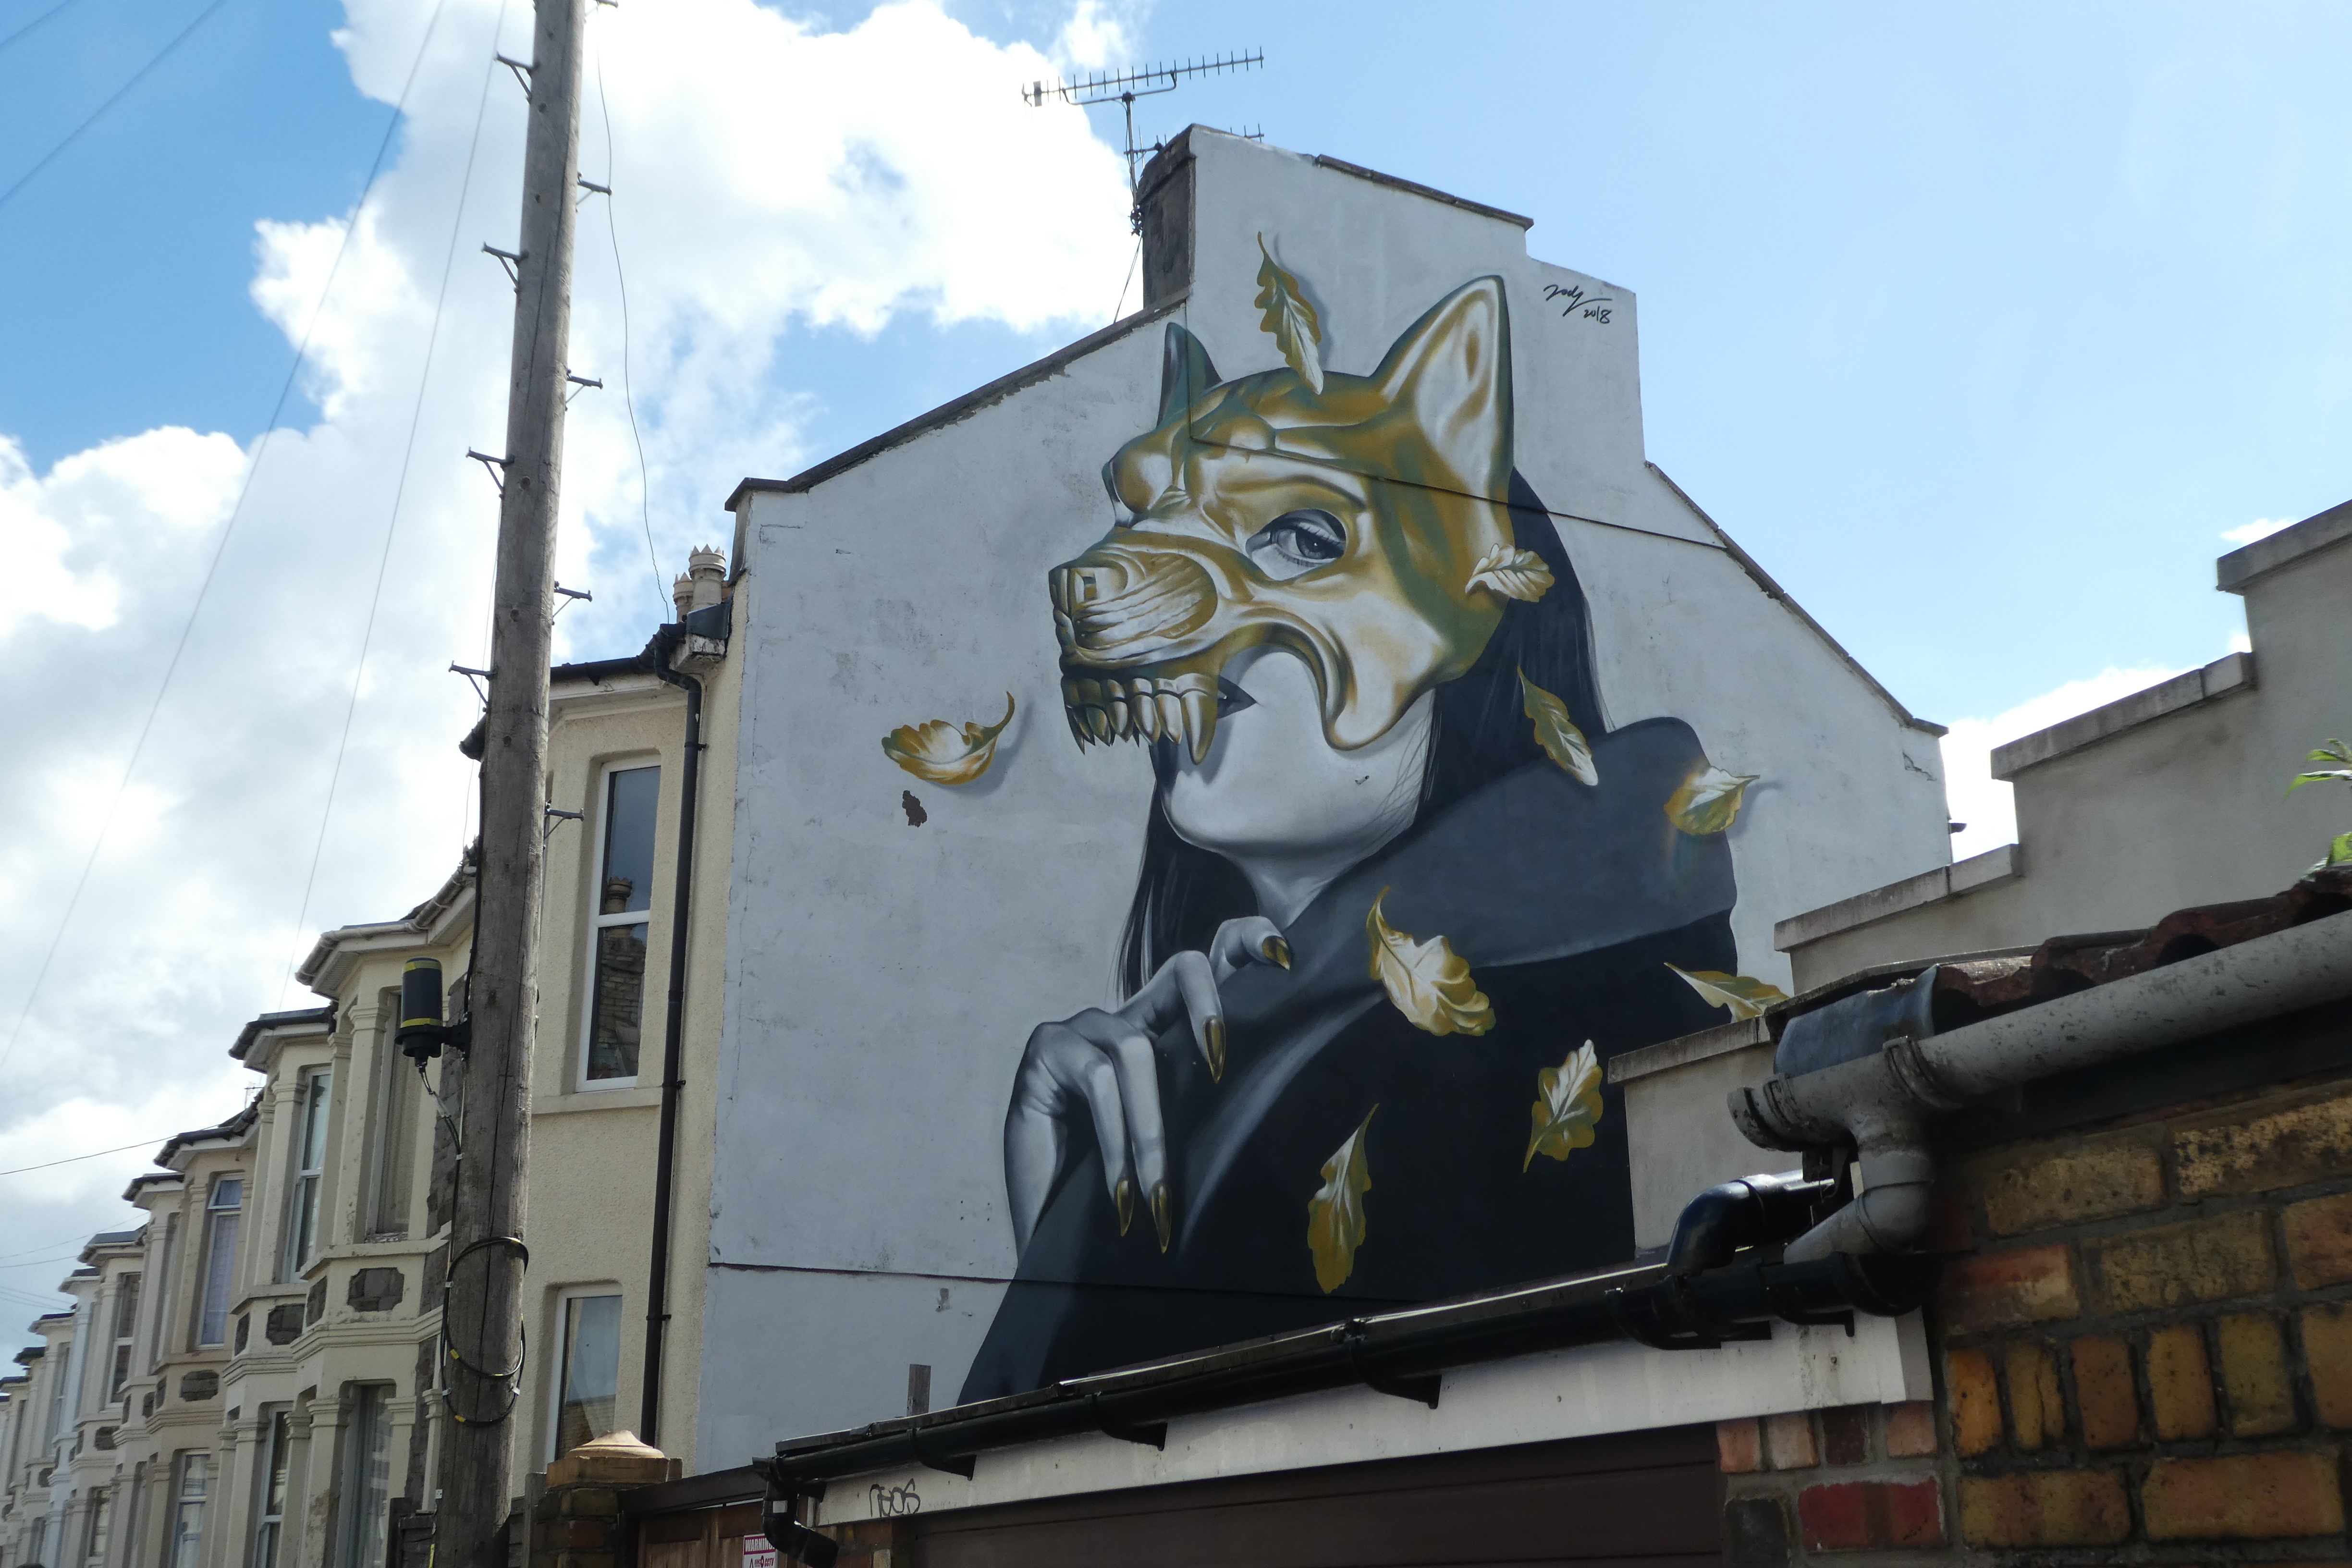 Jody street art, Bristol